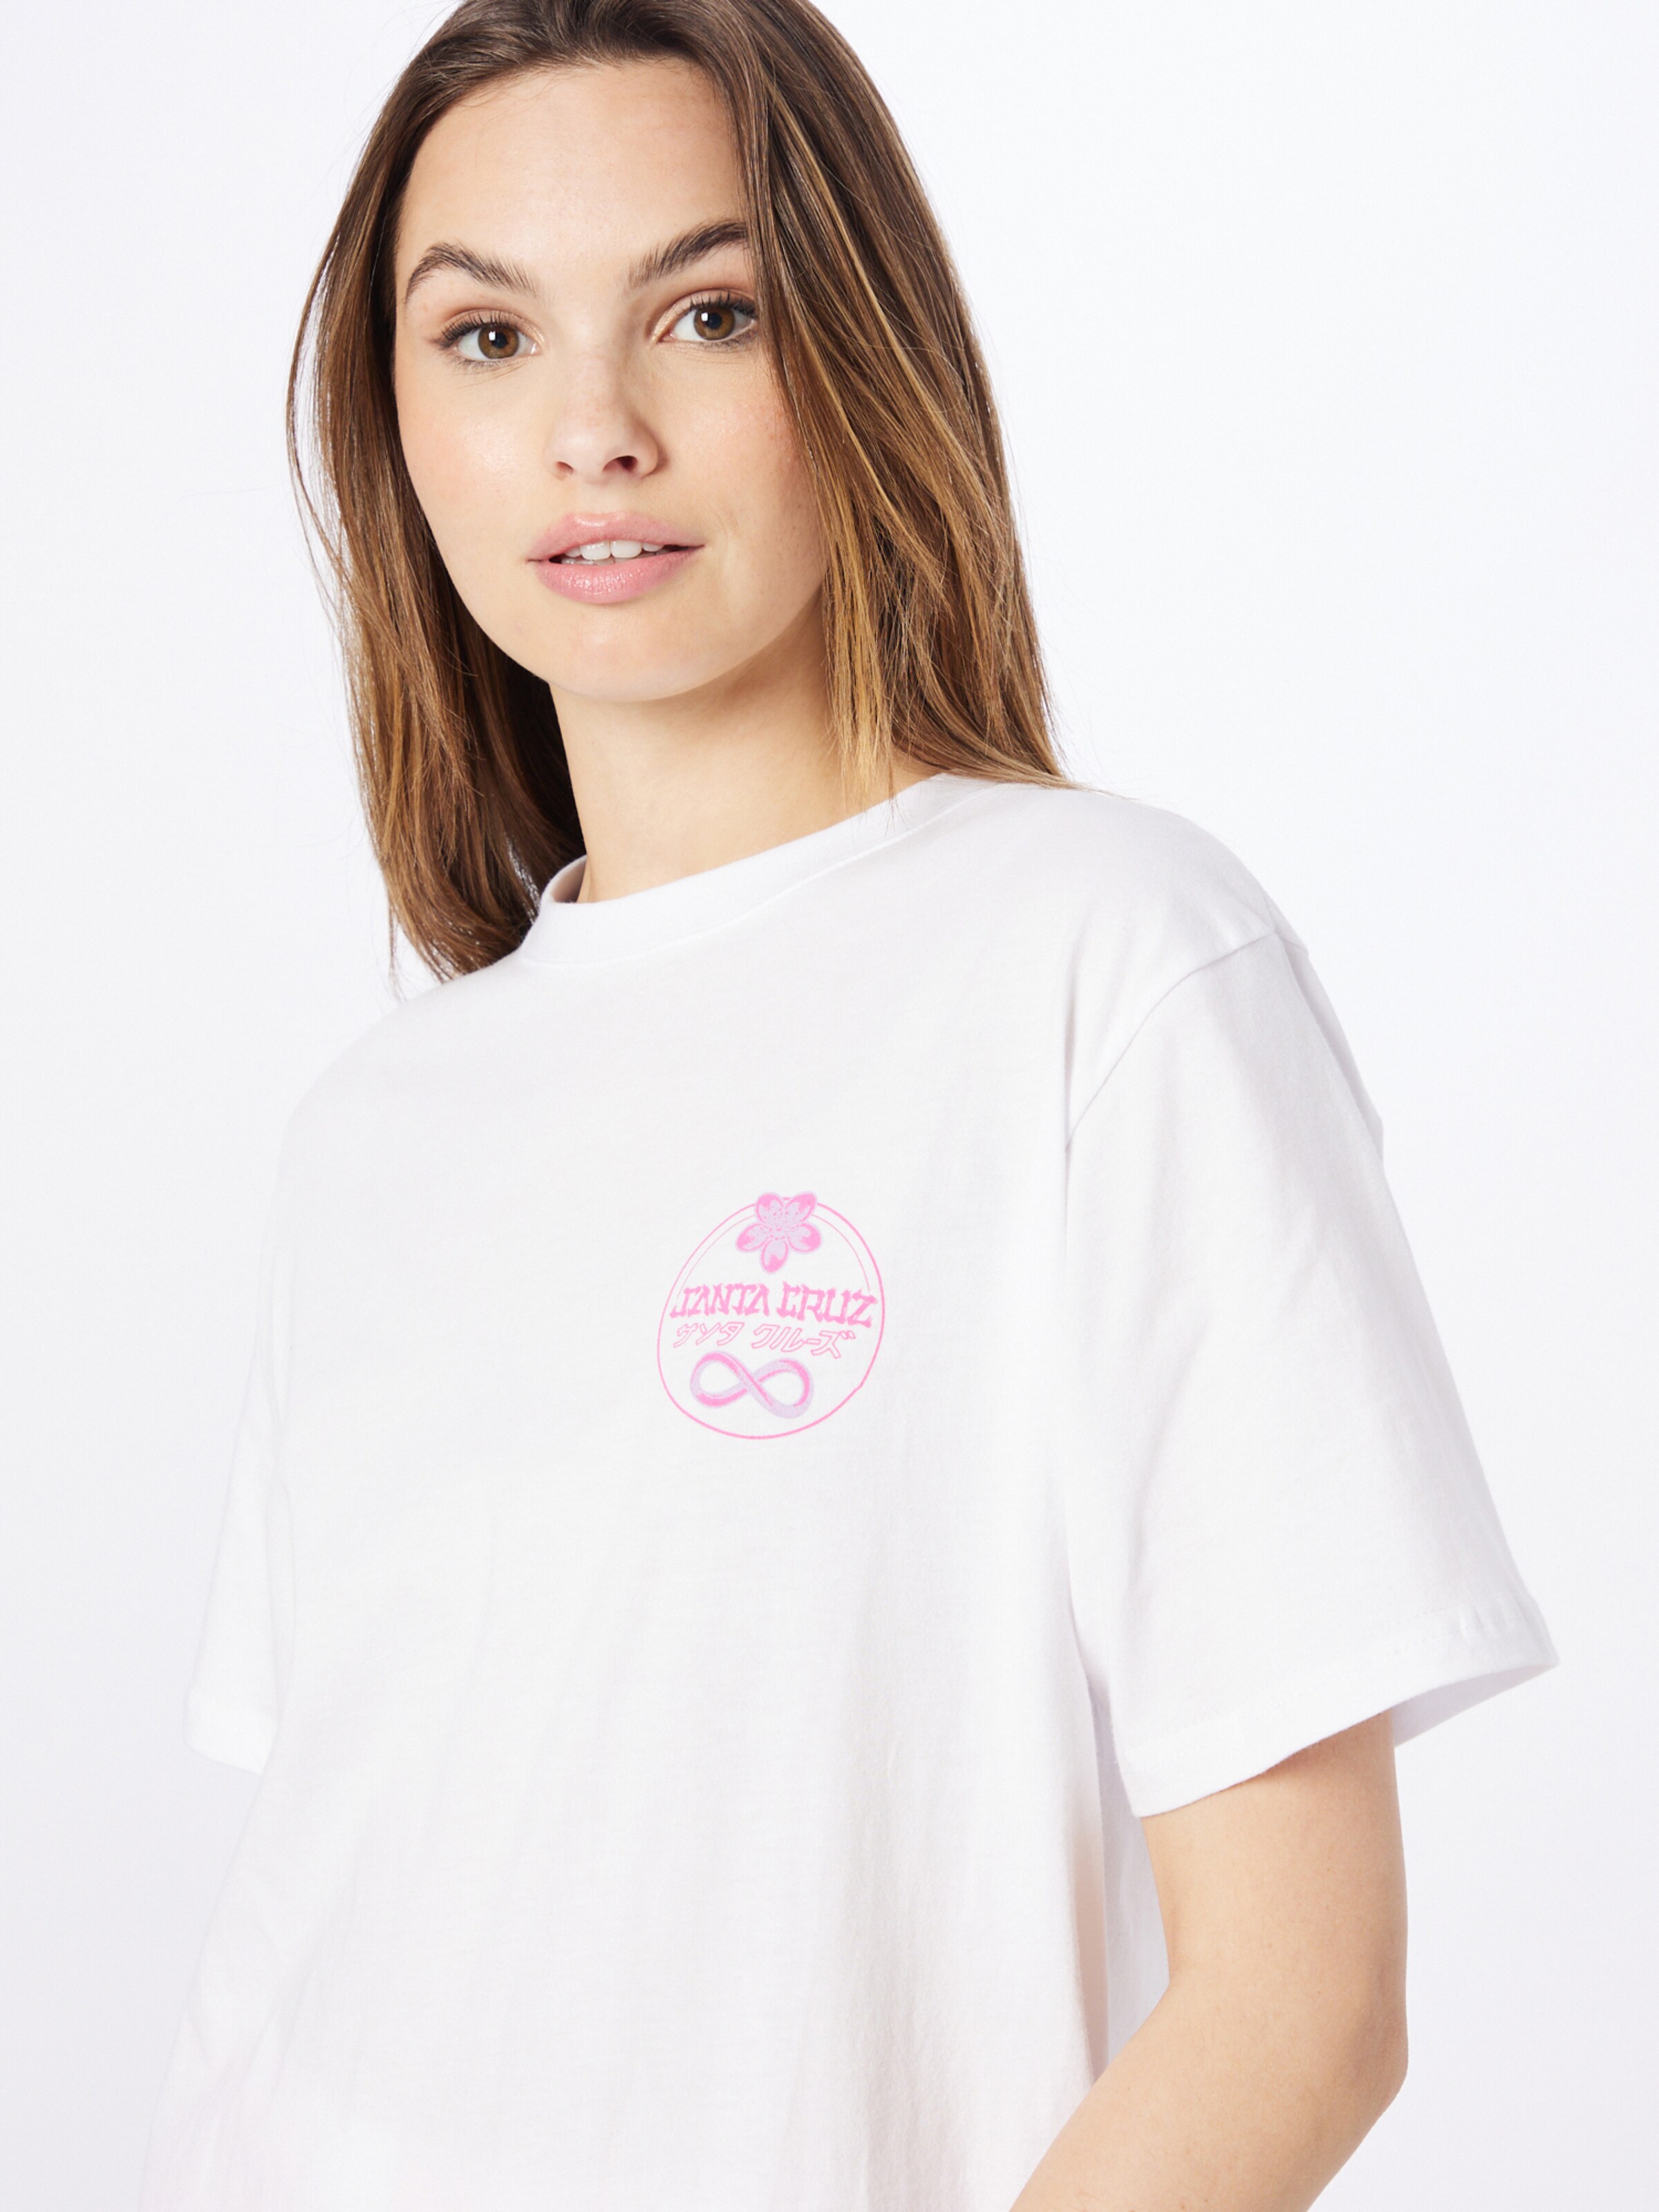 Frauen Shirts & Tops Santa Cruz T-Shirt in Weiß - ZO02781